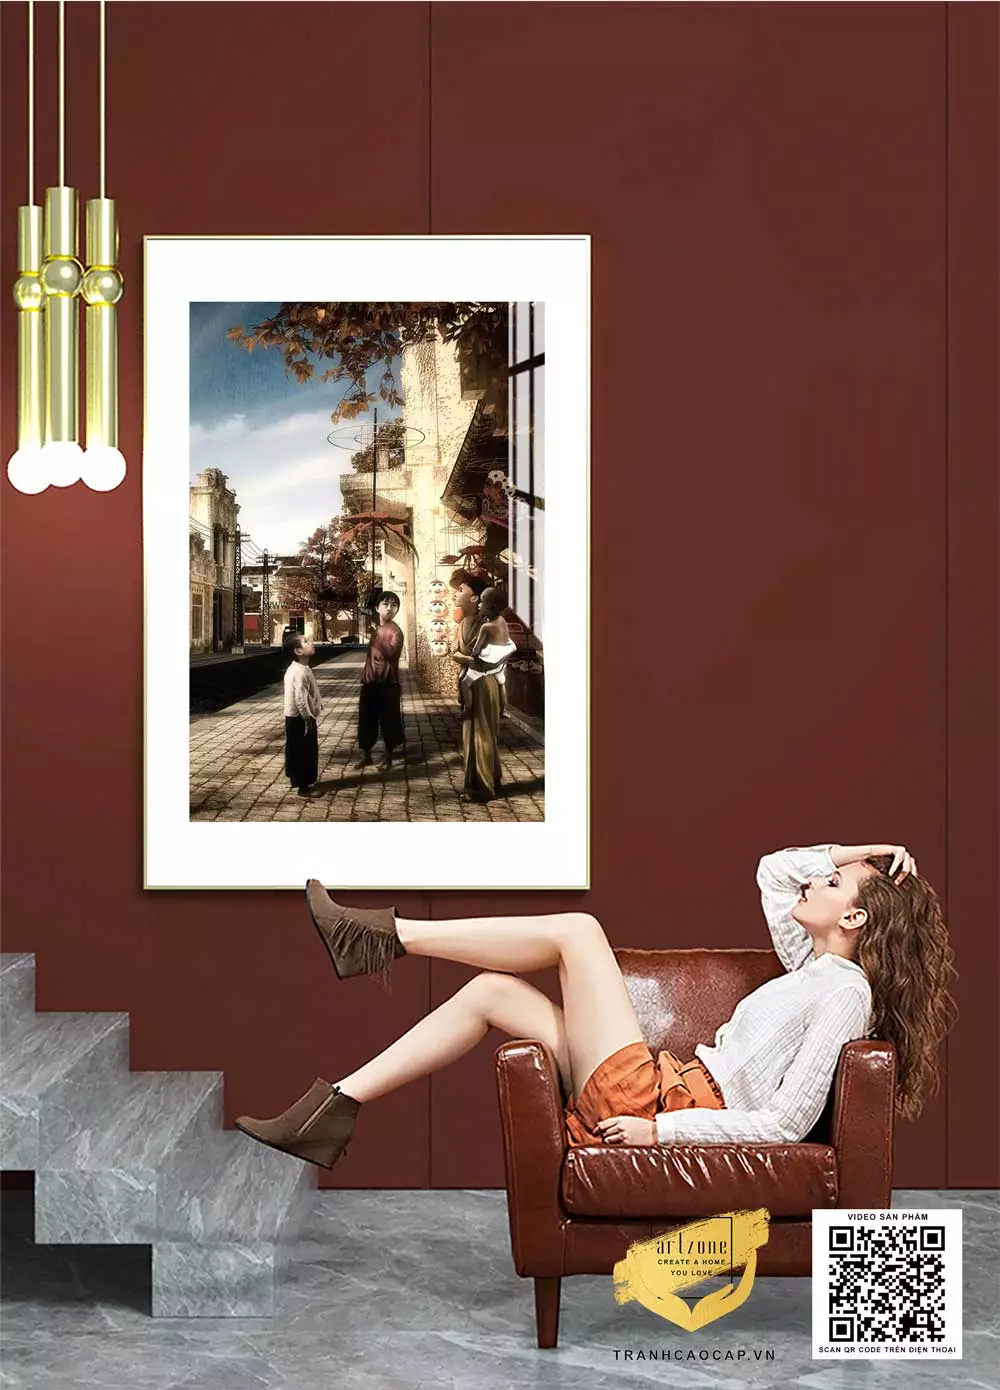 Nội dung Tranh Decor vải Canvas bền trang trí tiệm cafe Hà Nội xưa Tranh Decor vải Canvas bền trang trí tiệm cafe Hà Nội xưa 70X105 P/N: AZ1-0925-KN-CANVAS-70X105